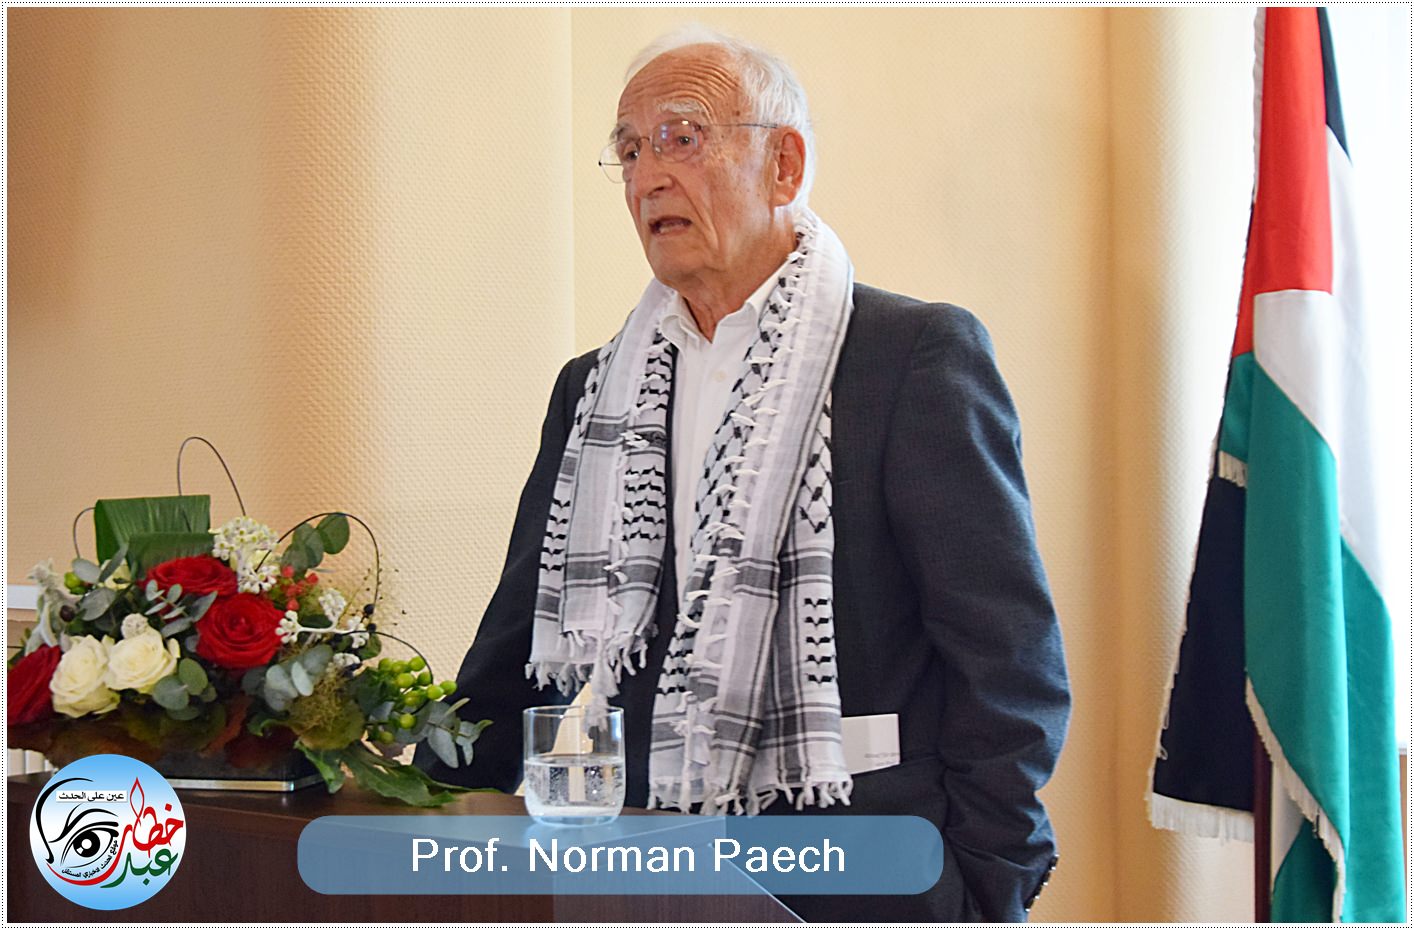 Prof. Norman Paech